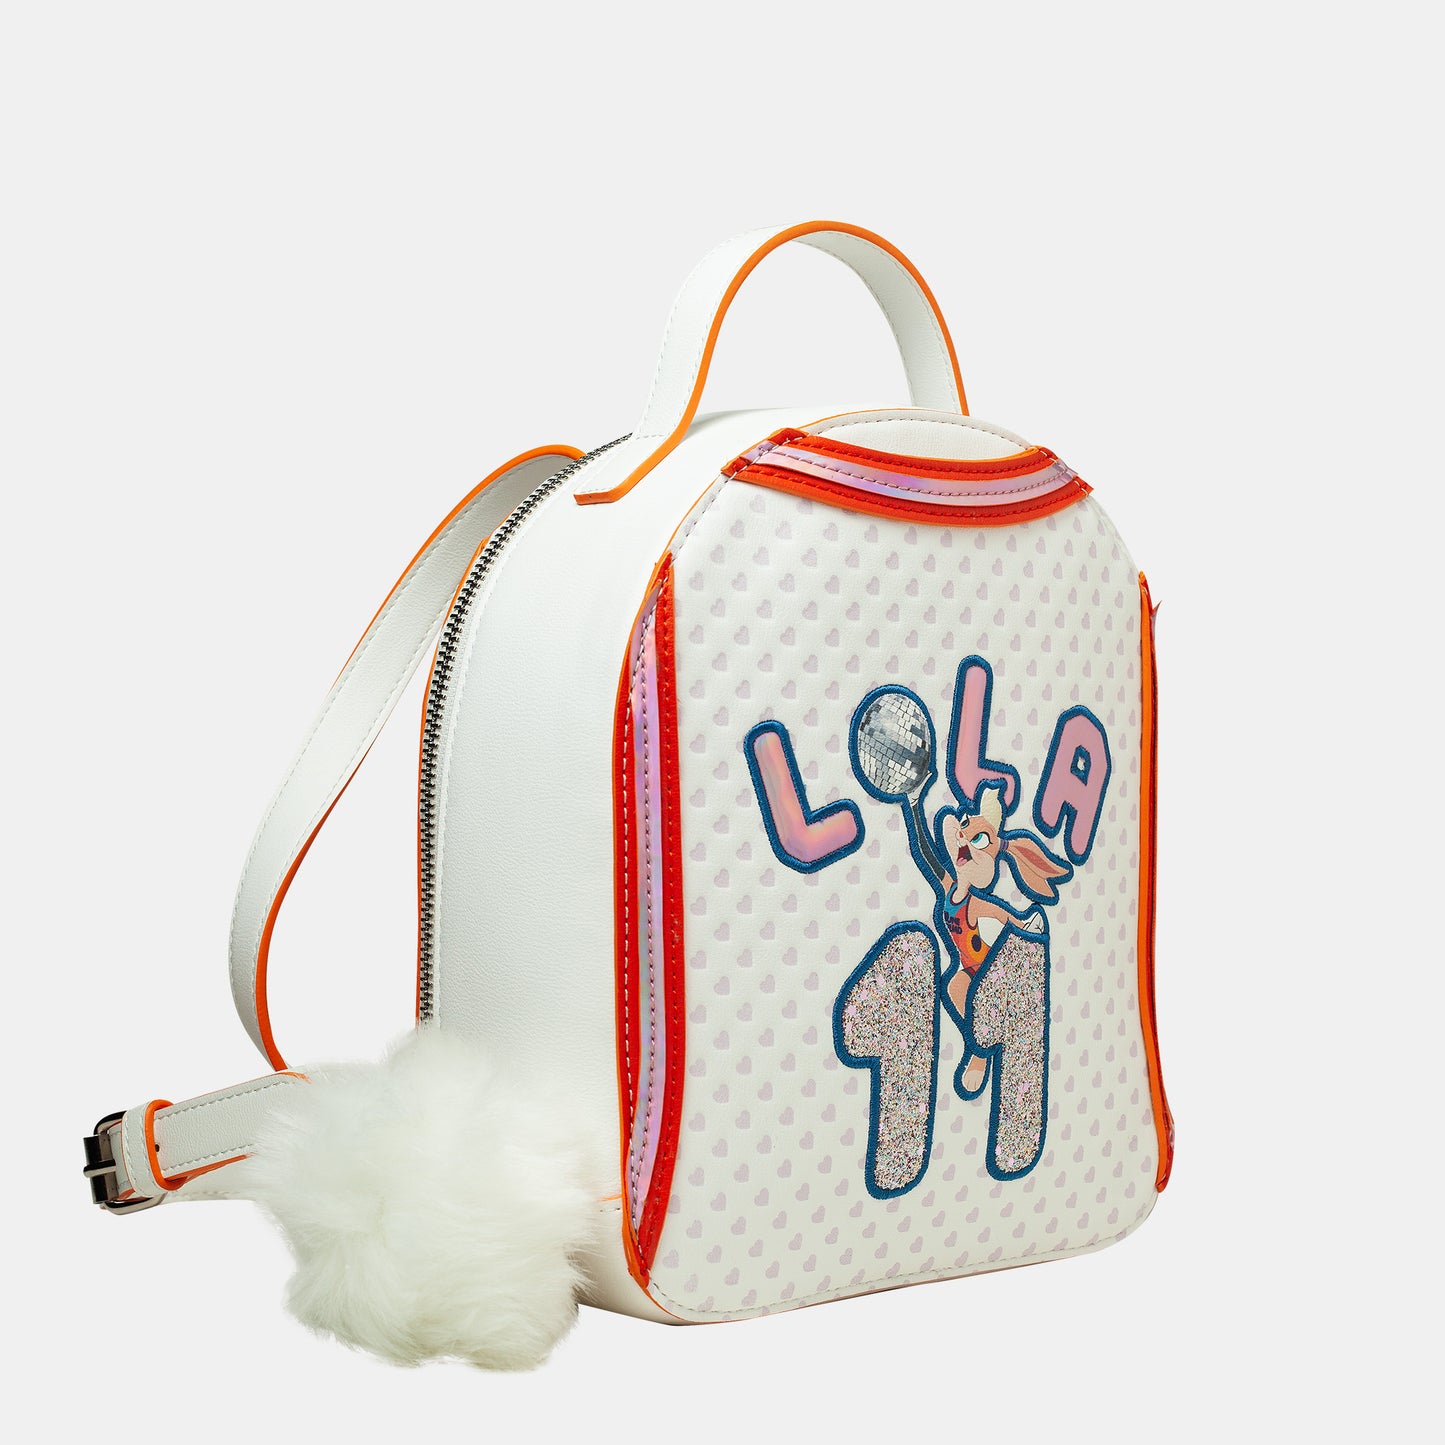 Space Jam: A New Legacy Lola Bunny Mini Backpack